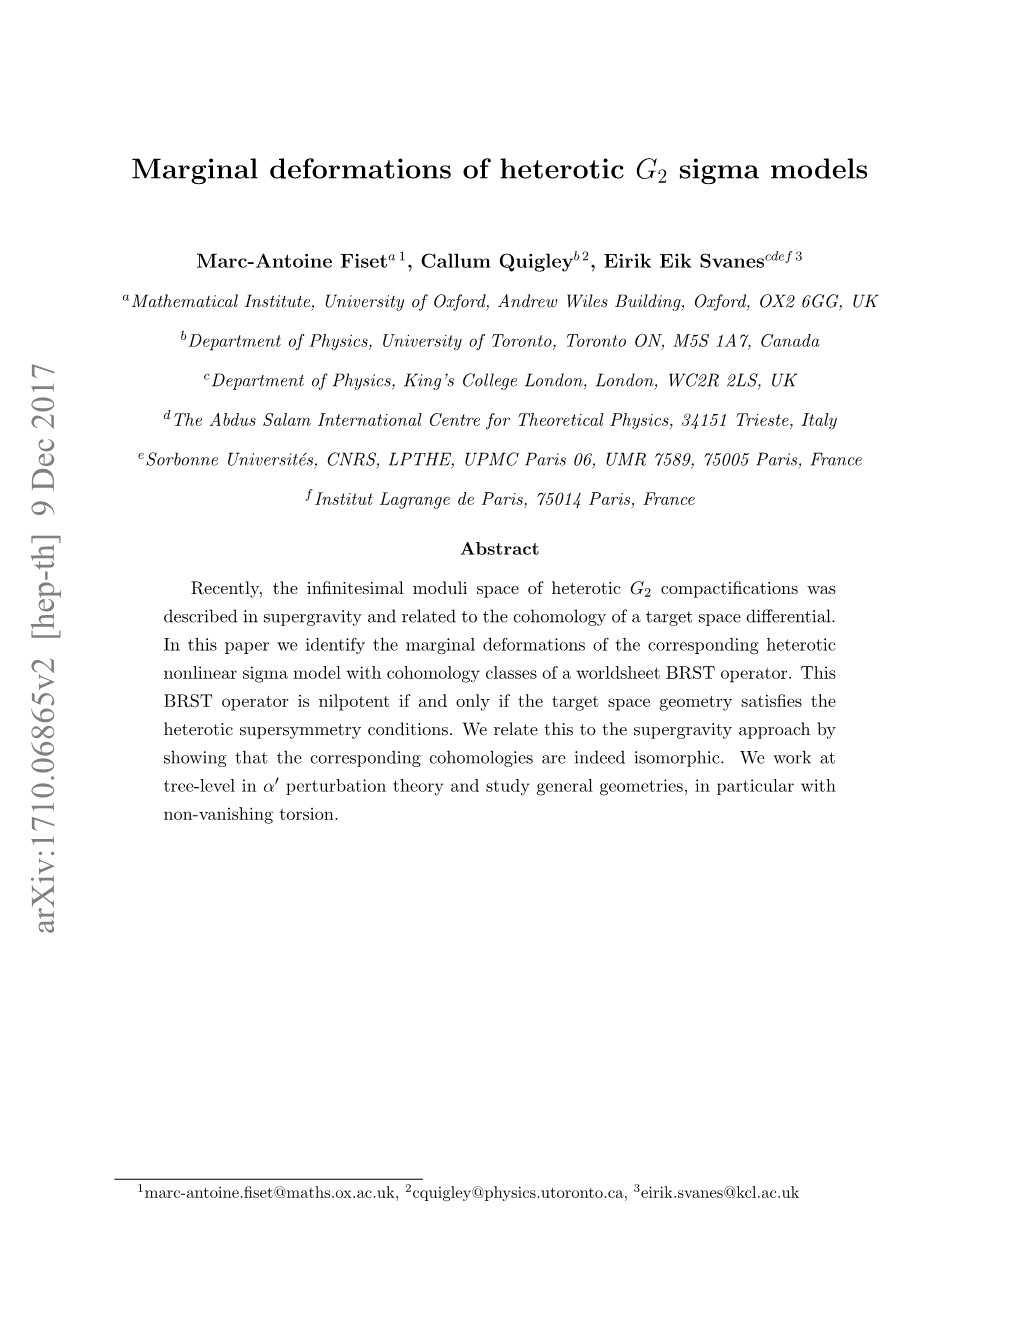 Marginal Deformations of Heterotic G2 Sigma Models